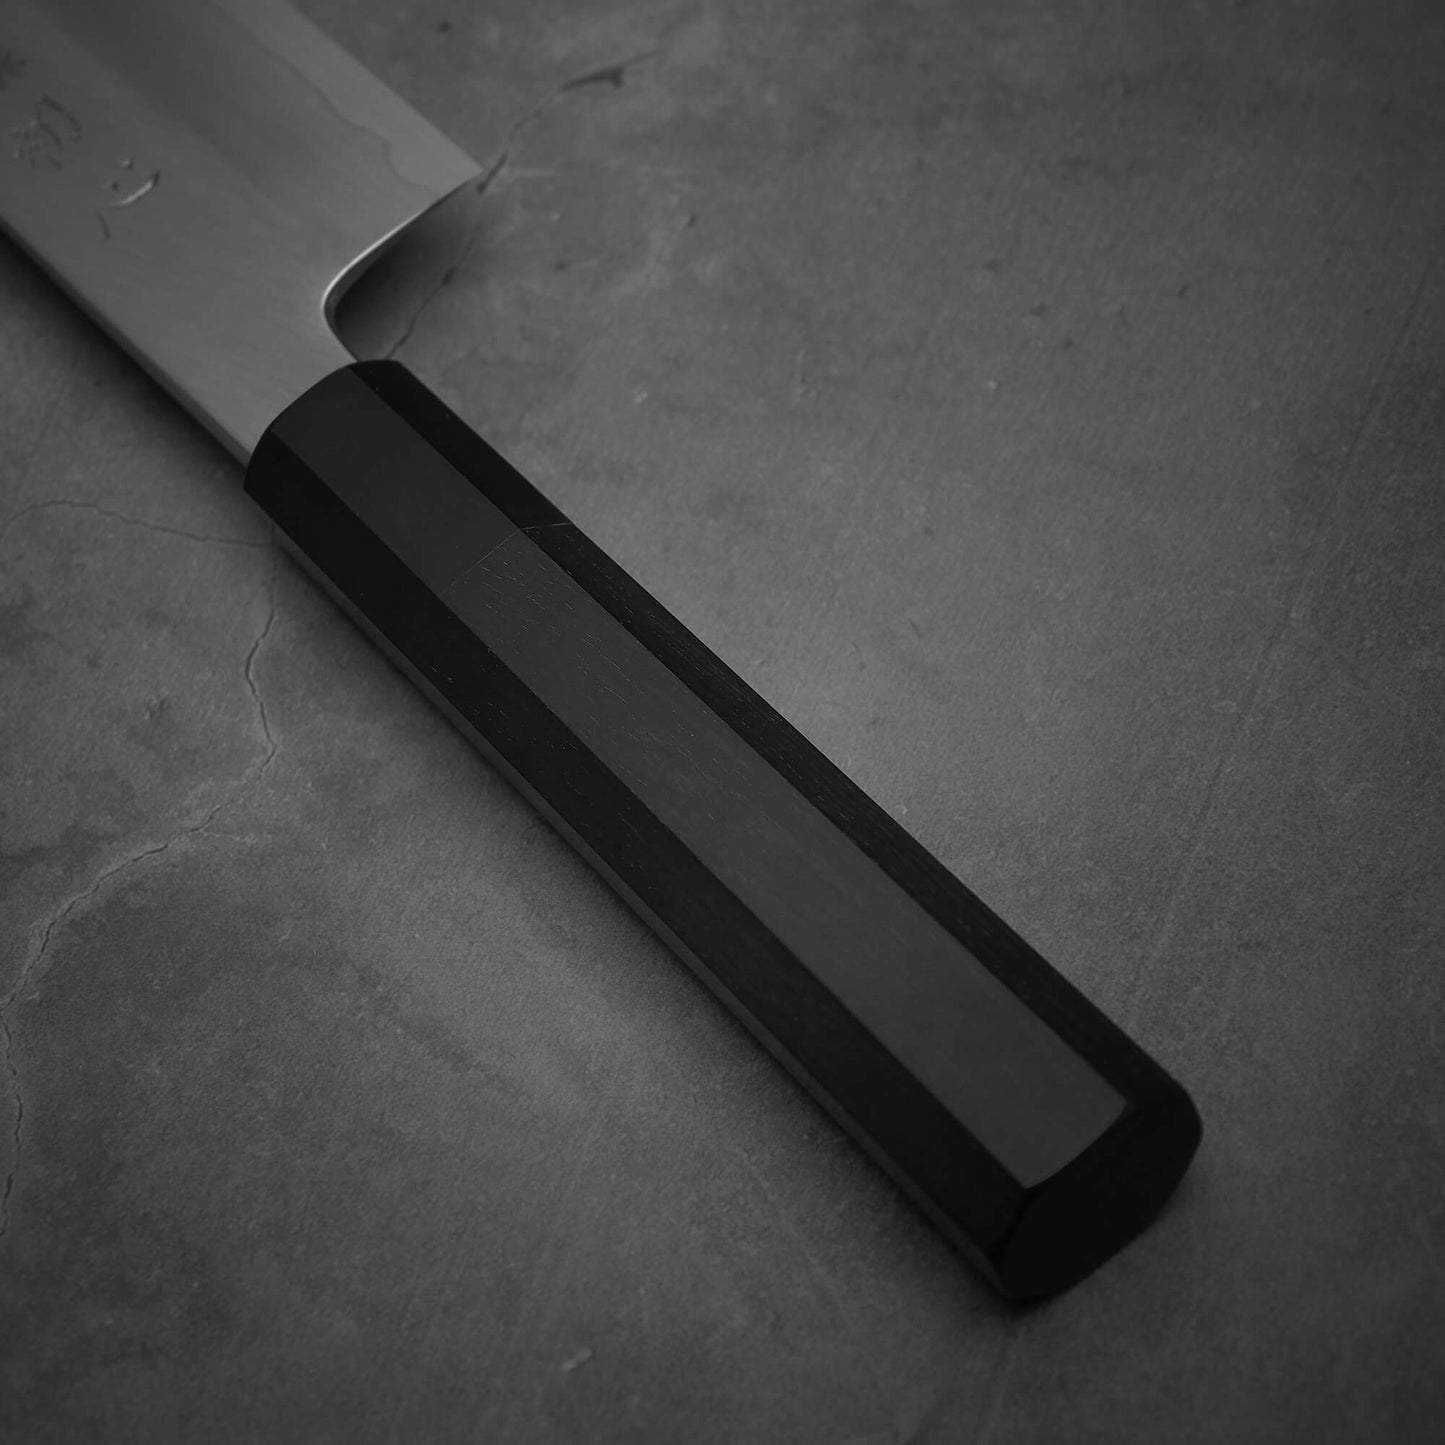 Close up view of the handle of Hatsukokoro Nakagawa ginsan kiritsuke gyuto knife